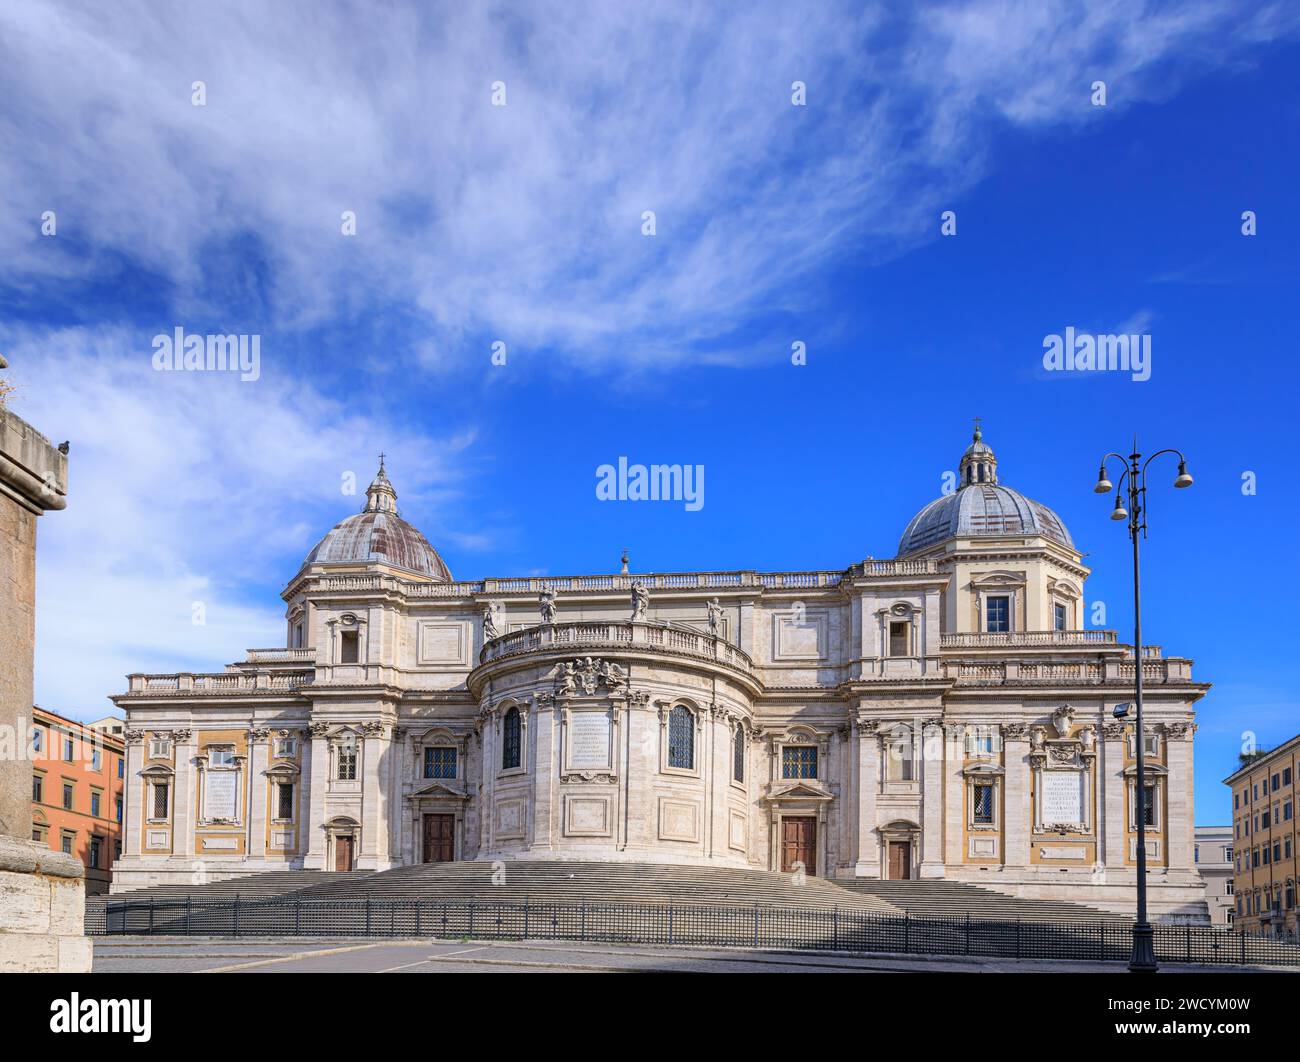 Facade of the Basilica of Saint Mary Major in Rome, Italy. Stock Photo